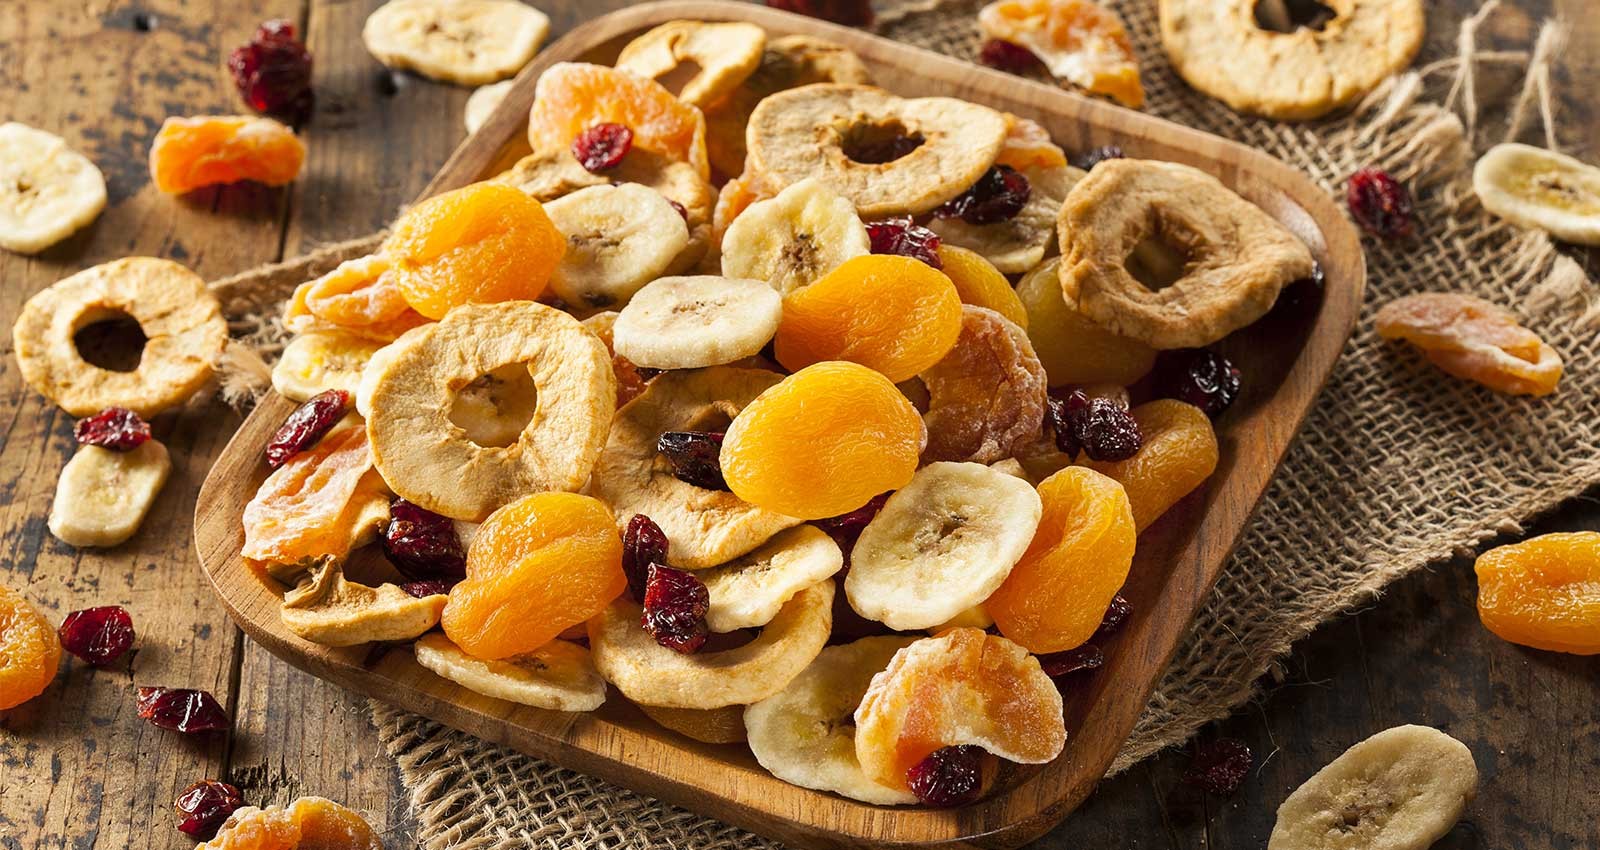 Kourosh Dried Fruits, Nuts and Pulses | LinkedIn